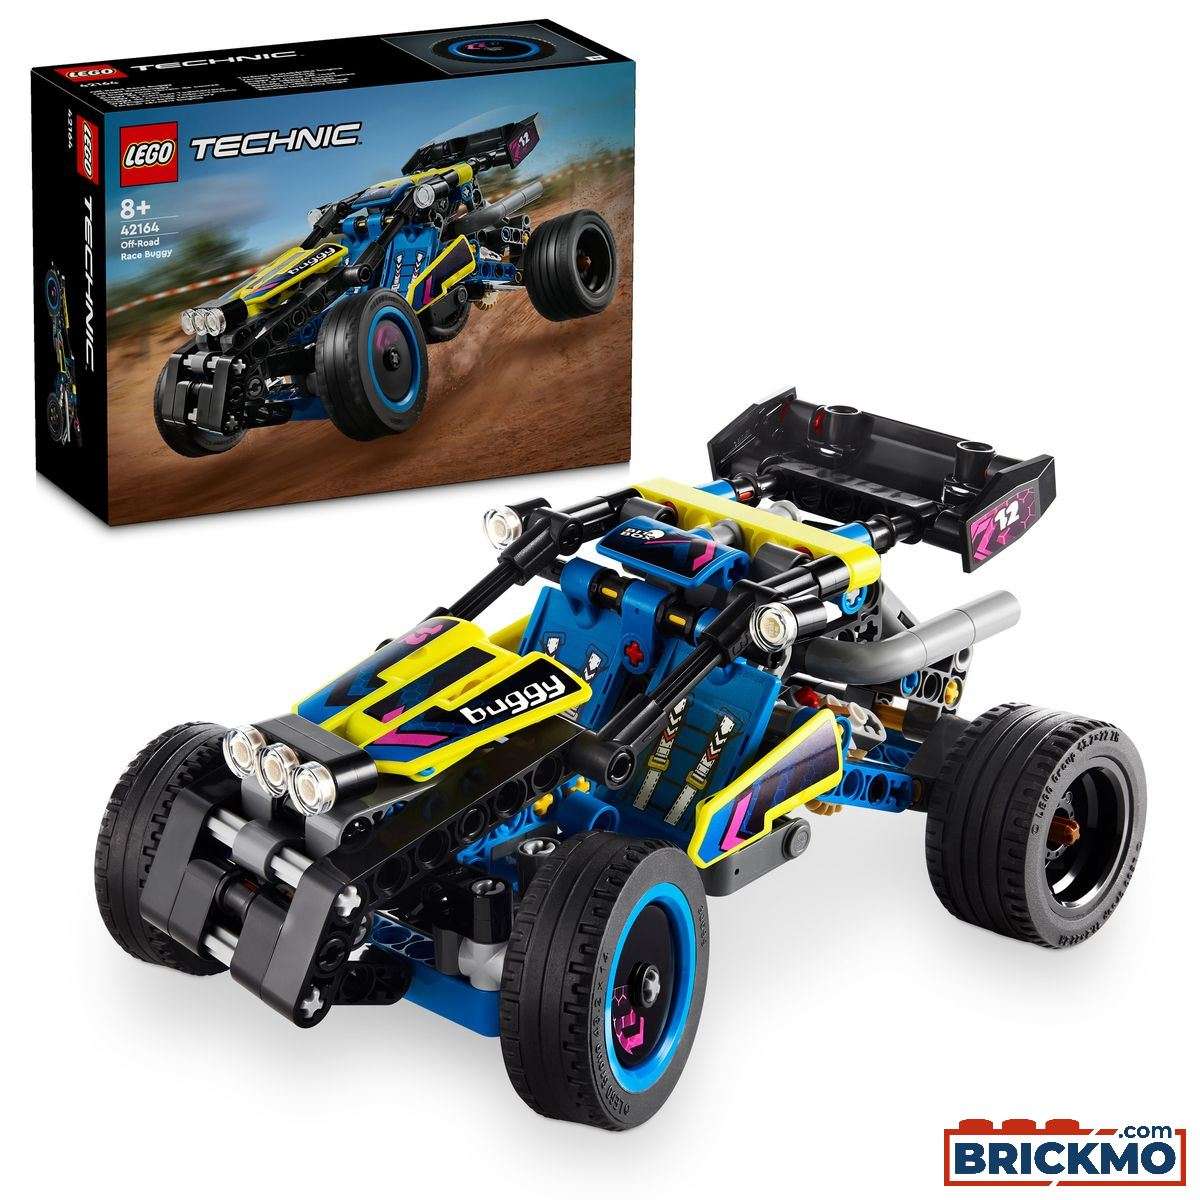 LEGO Technic 42164 Le buggy tout-terrain de course 42164